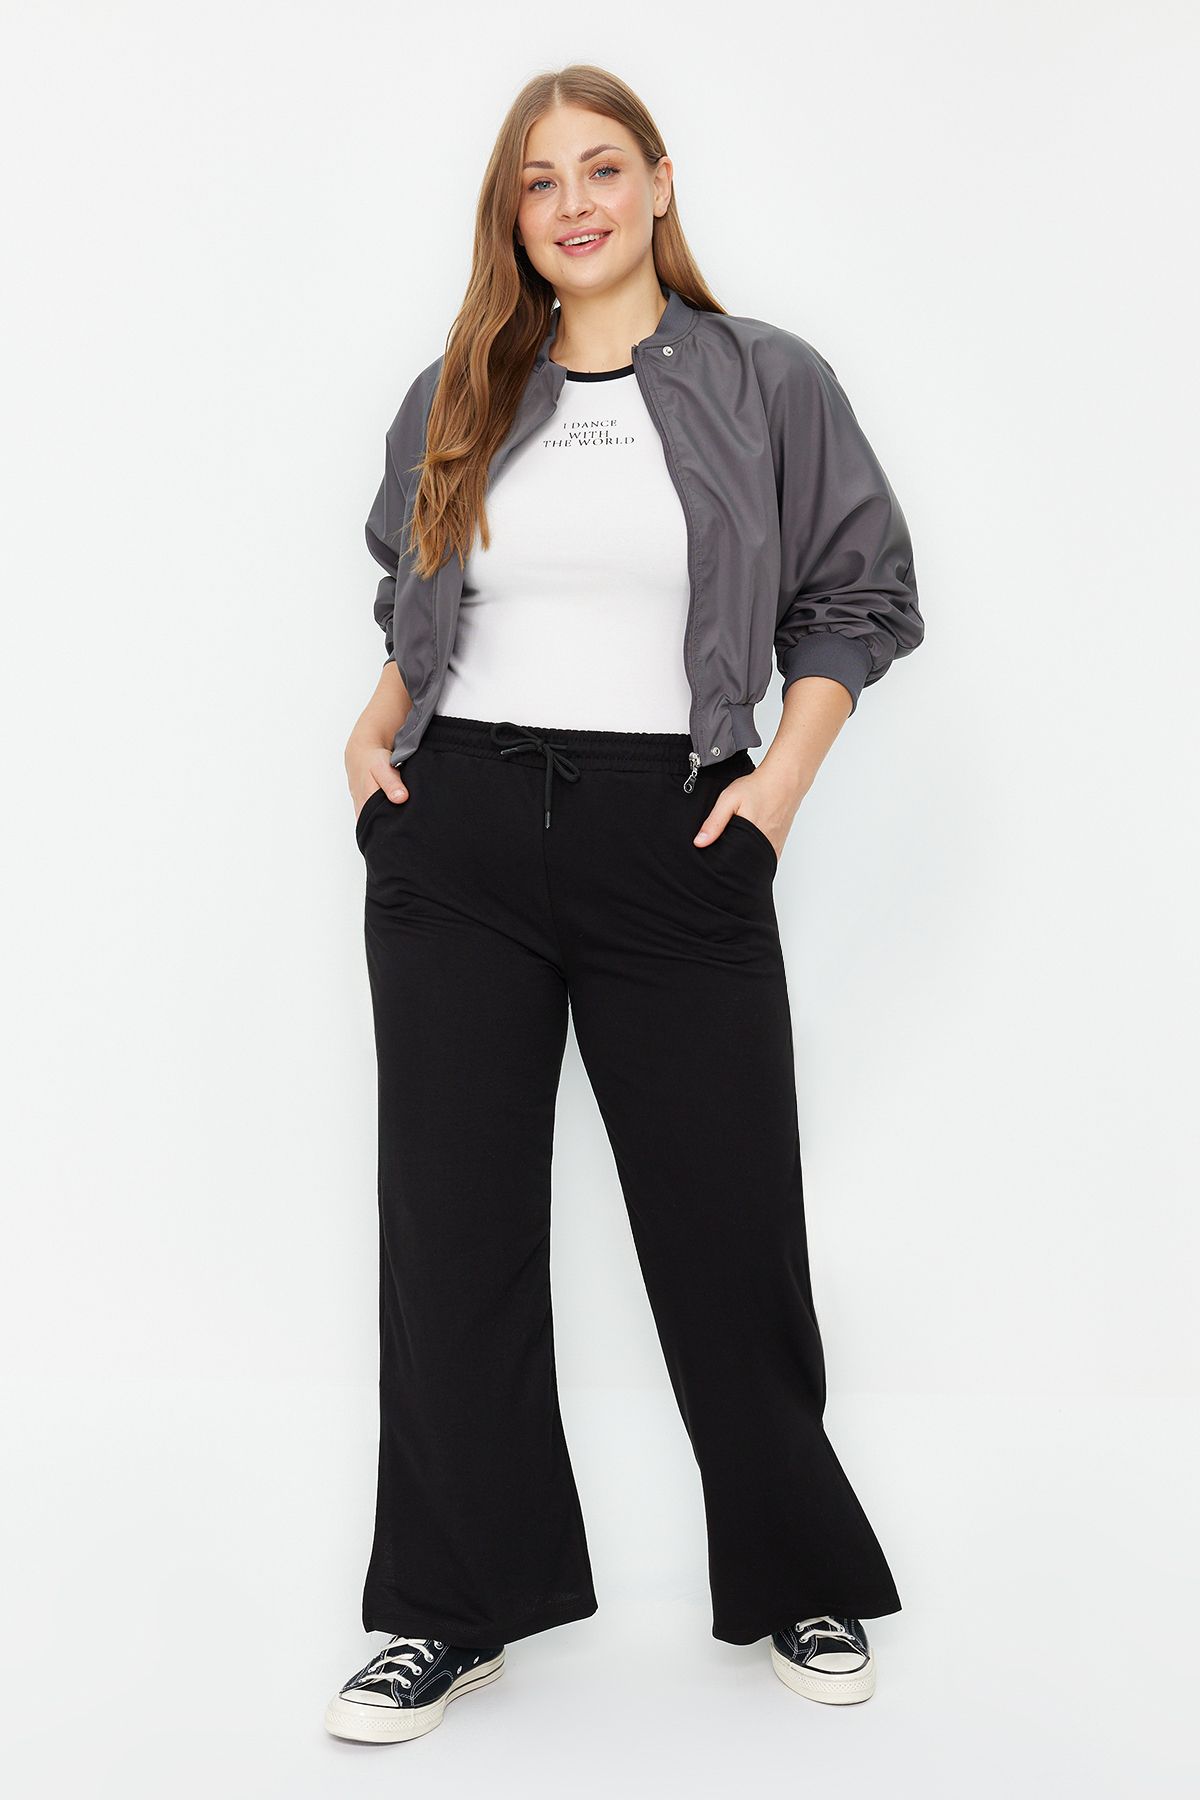 Trendyol Plus Size Black Knitted Fleece Leggings 2024, Buy Trendyol Online